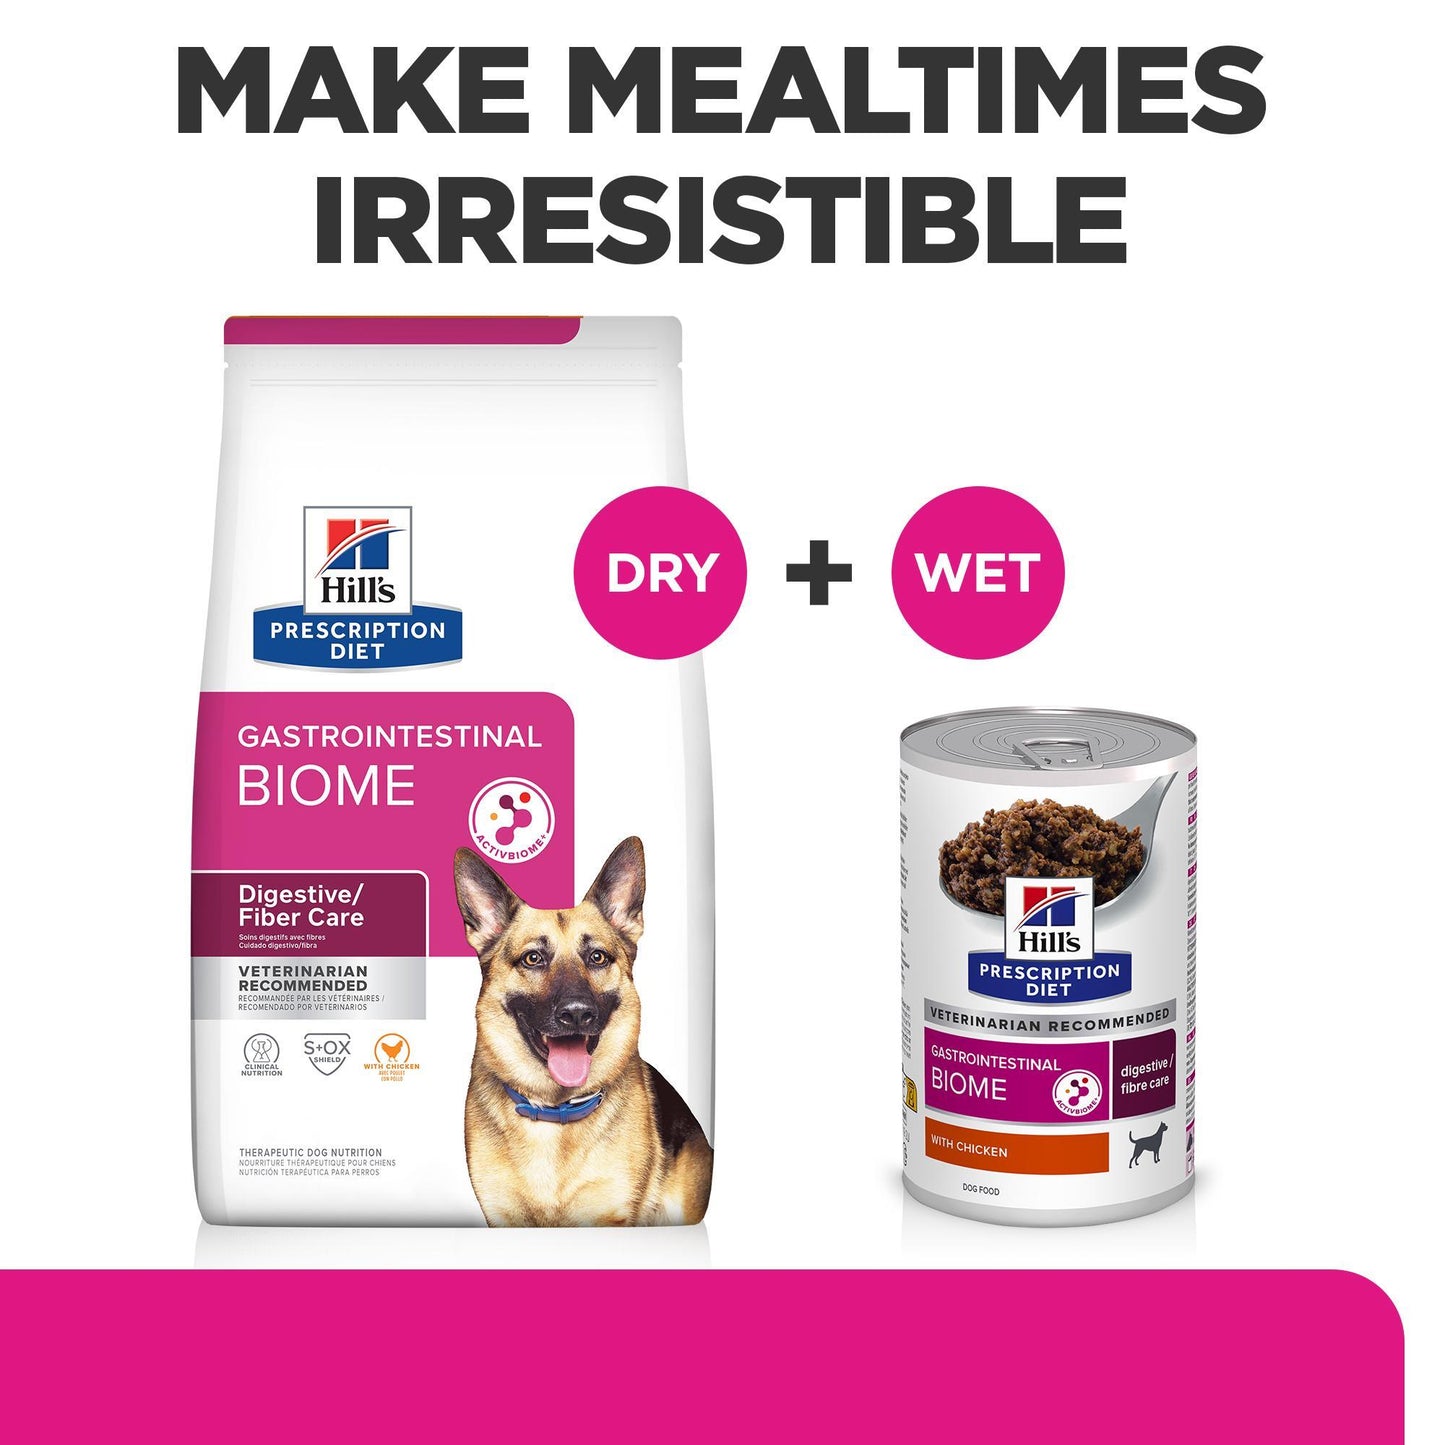 Hill's Prescription Diet Gastrointestinal Biome Digestive Fibre Care Canned Dog Food